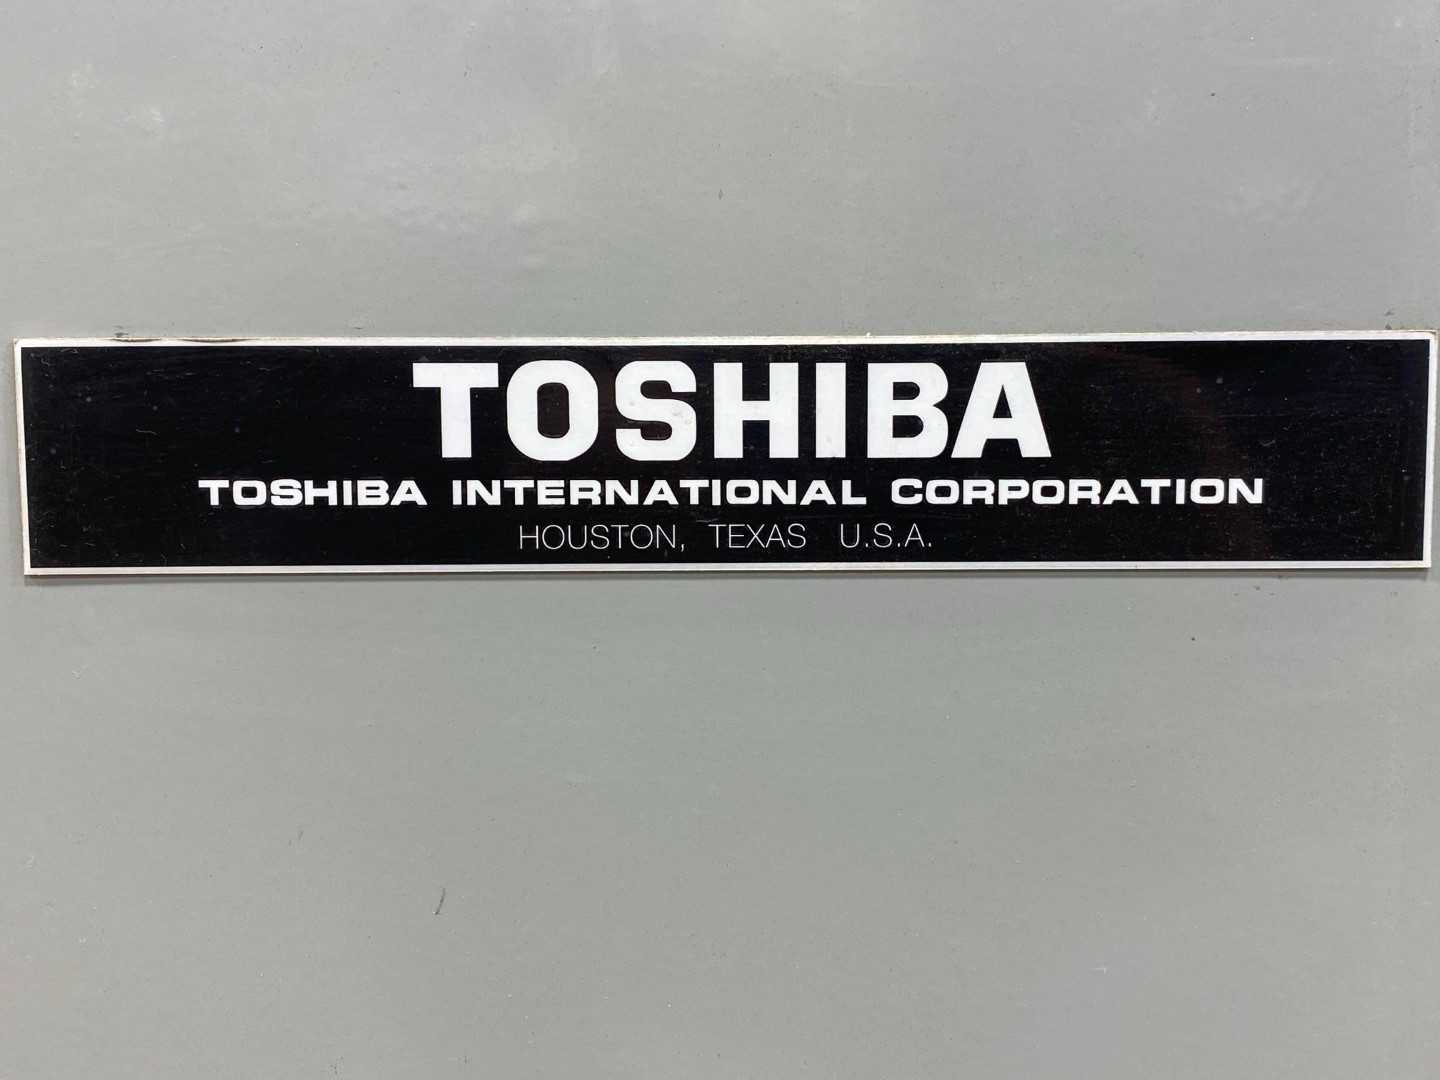 Toshiba G3 B451K40CCI  with VT130S3-451KP12 ASD/VFD Transistor Inverter 